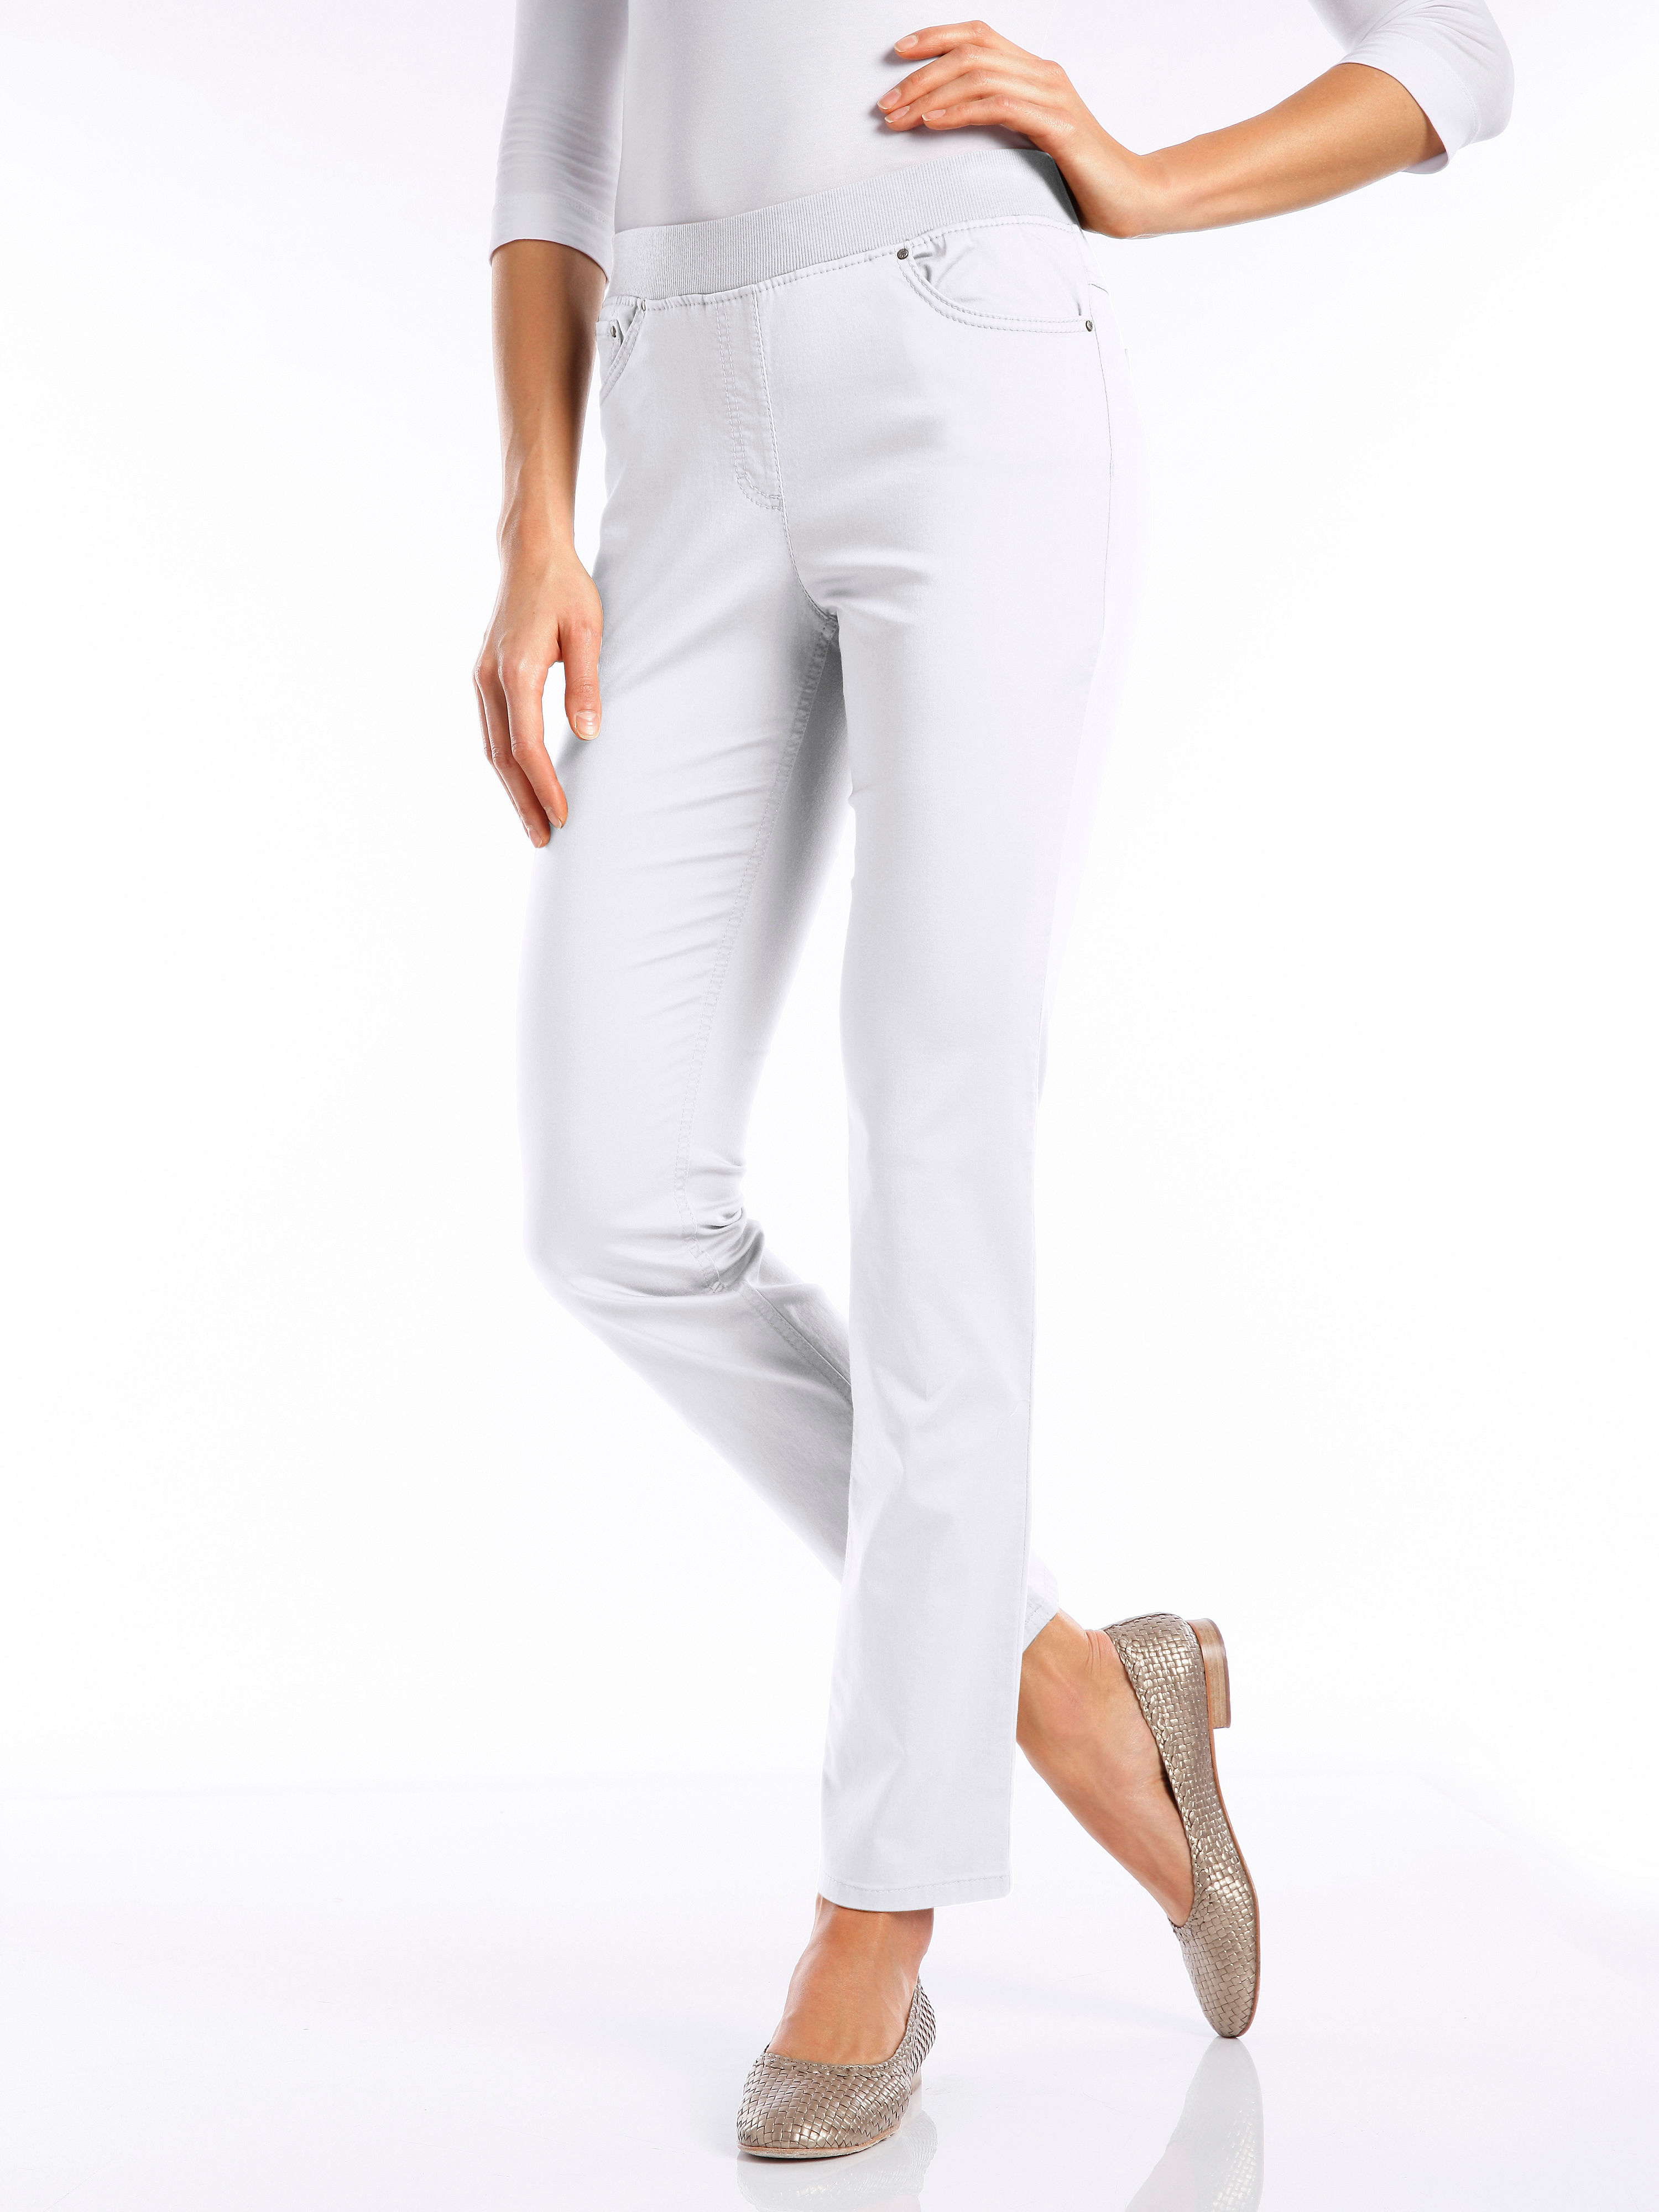 Raphaela by Brax - Comfort Plus pull-on trousers design Carina - white